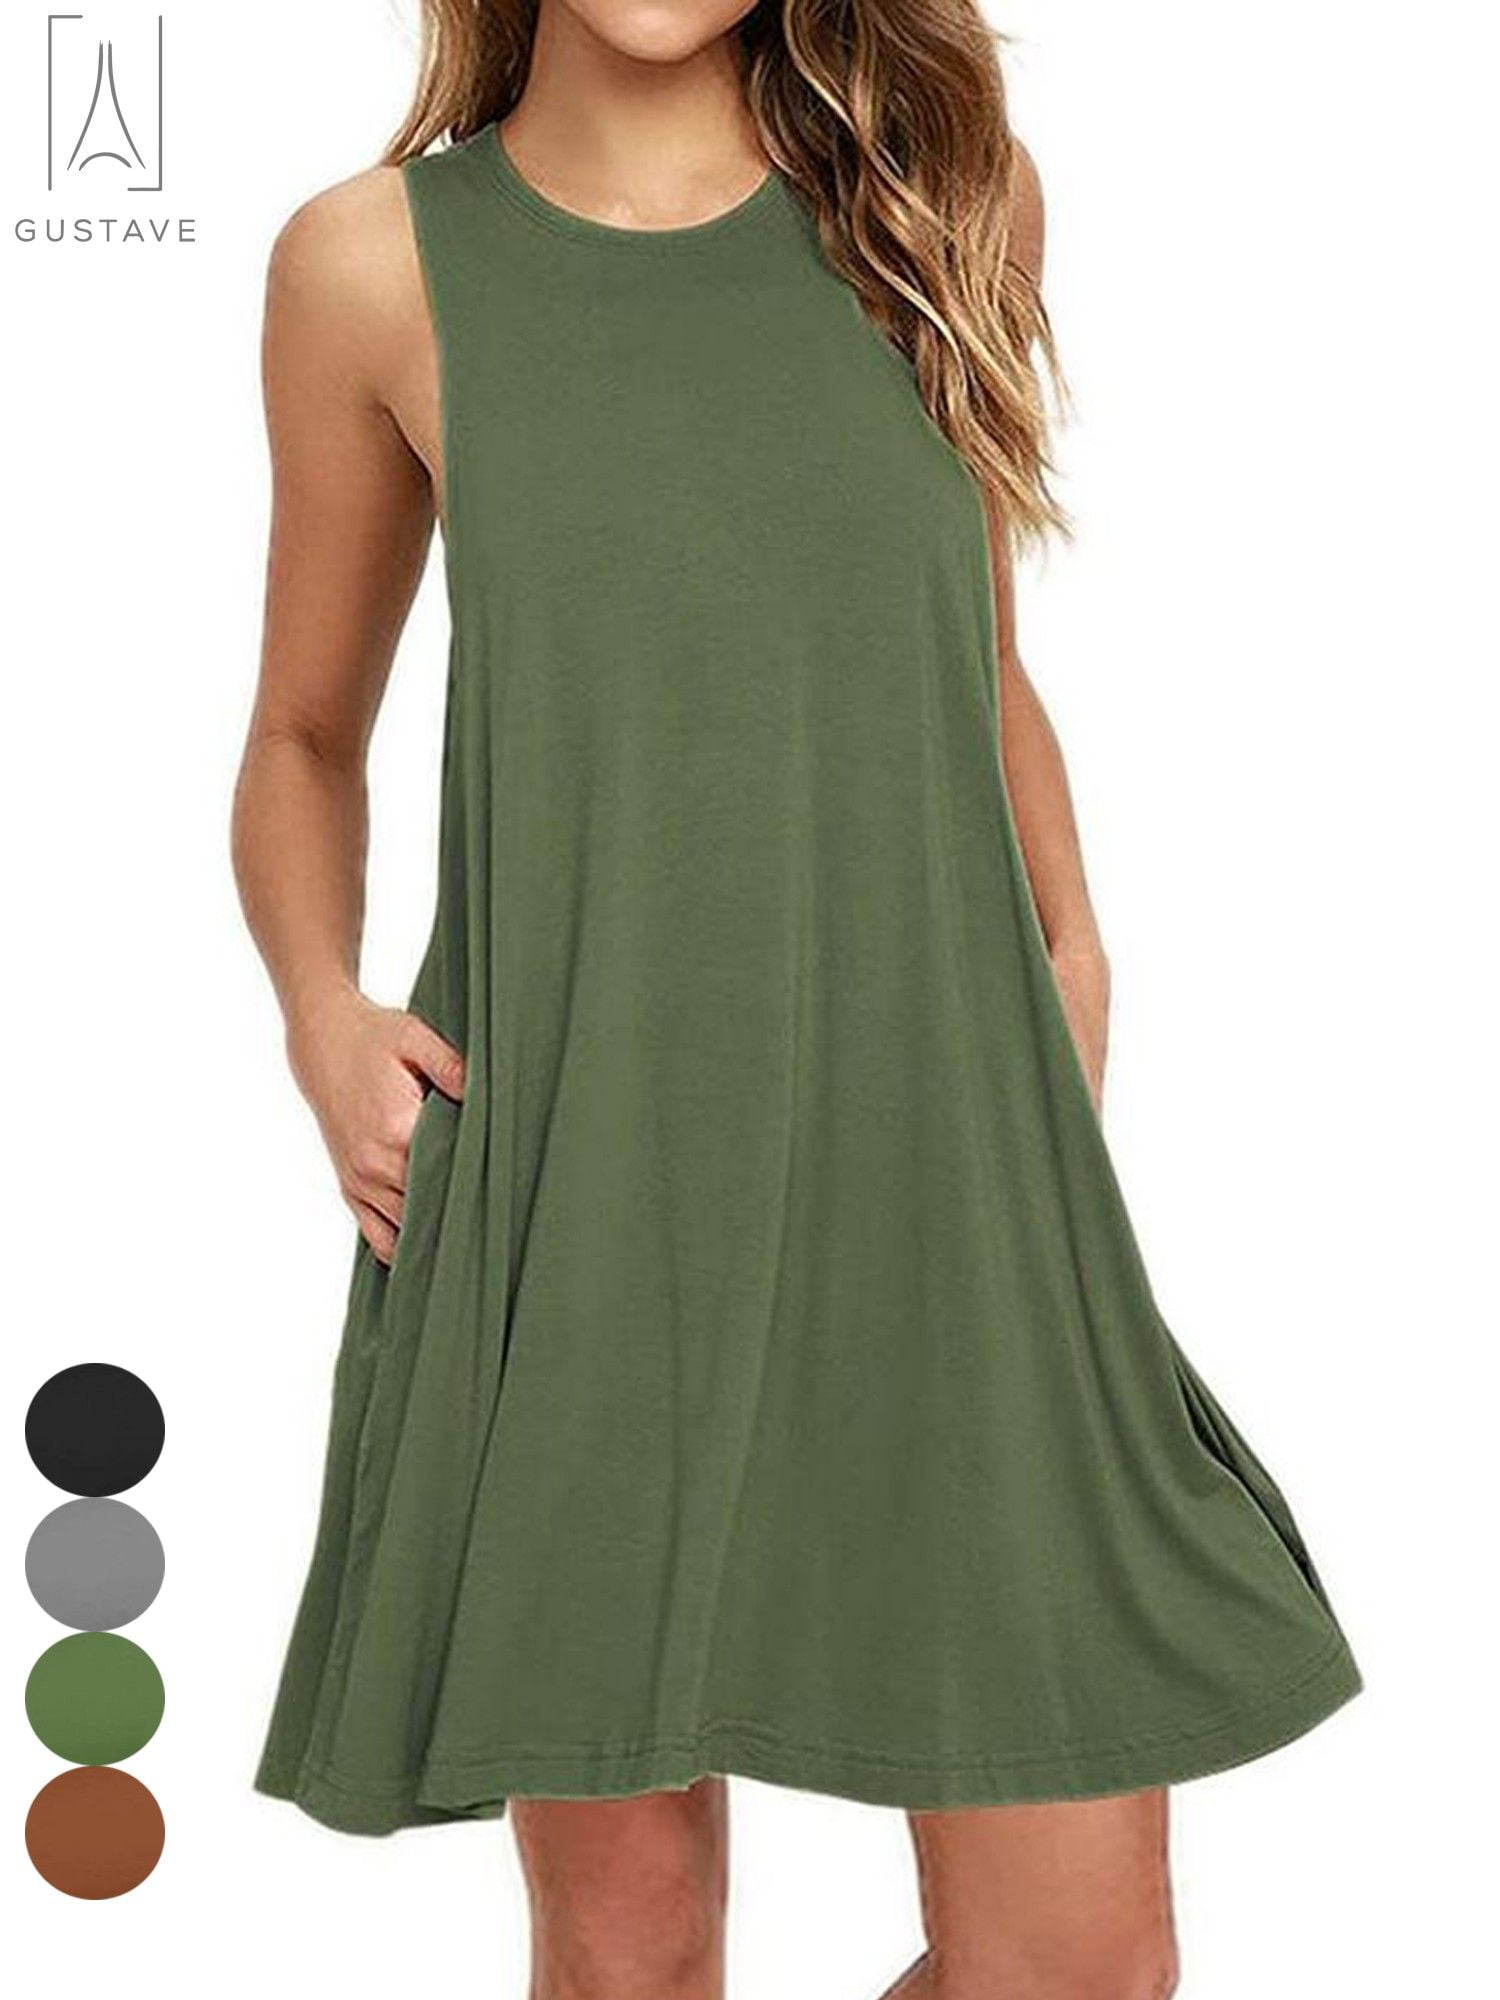 Womens Sleeveless Pockets T-Shirt Dresses Summer Casual Plain Pleated Tank Dress Swing Floral Lace Dress Plus Size 